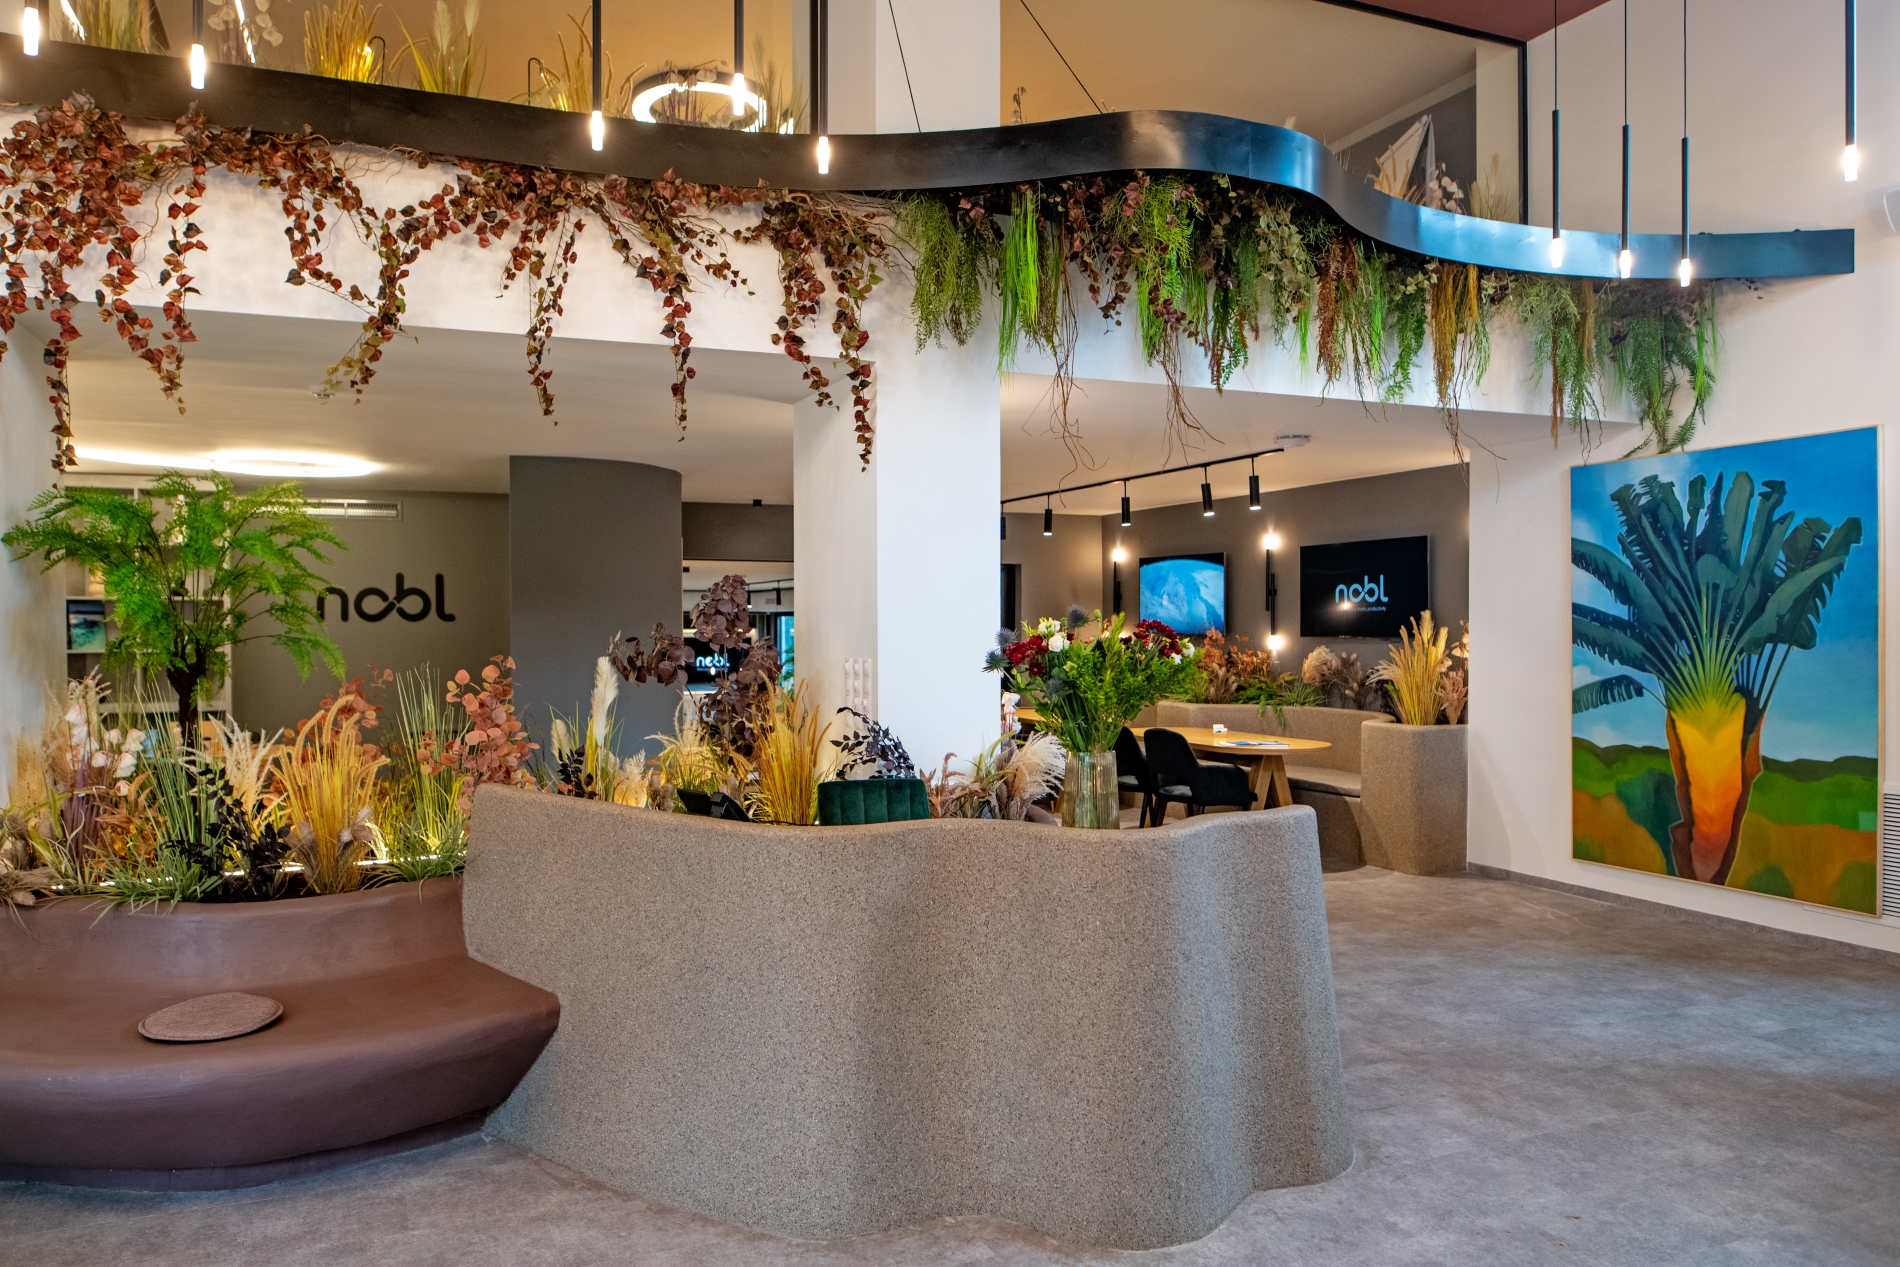 Nobl: ένας υπερσύγχρονος χώρος στα βόρεια προάστια, σχεδιασμένος για υψηλού επιπέδου εταιρικές εκδηλώσεις